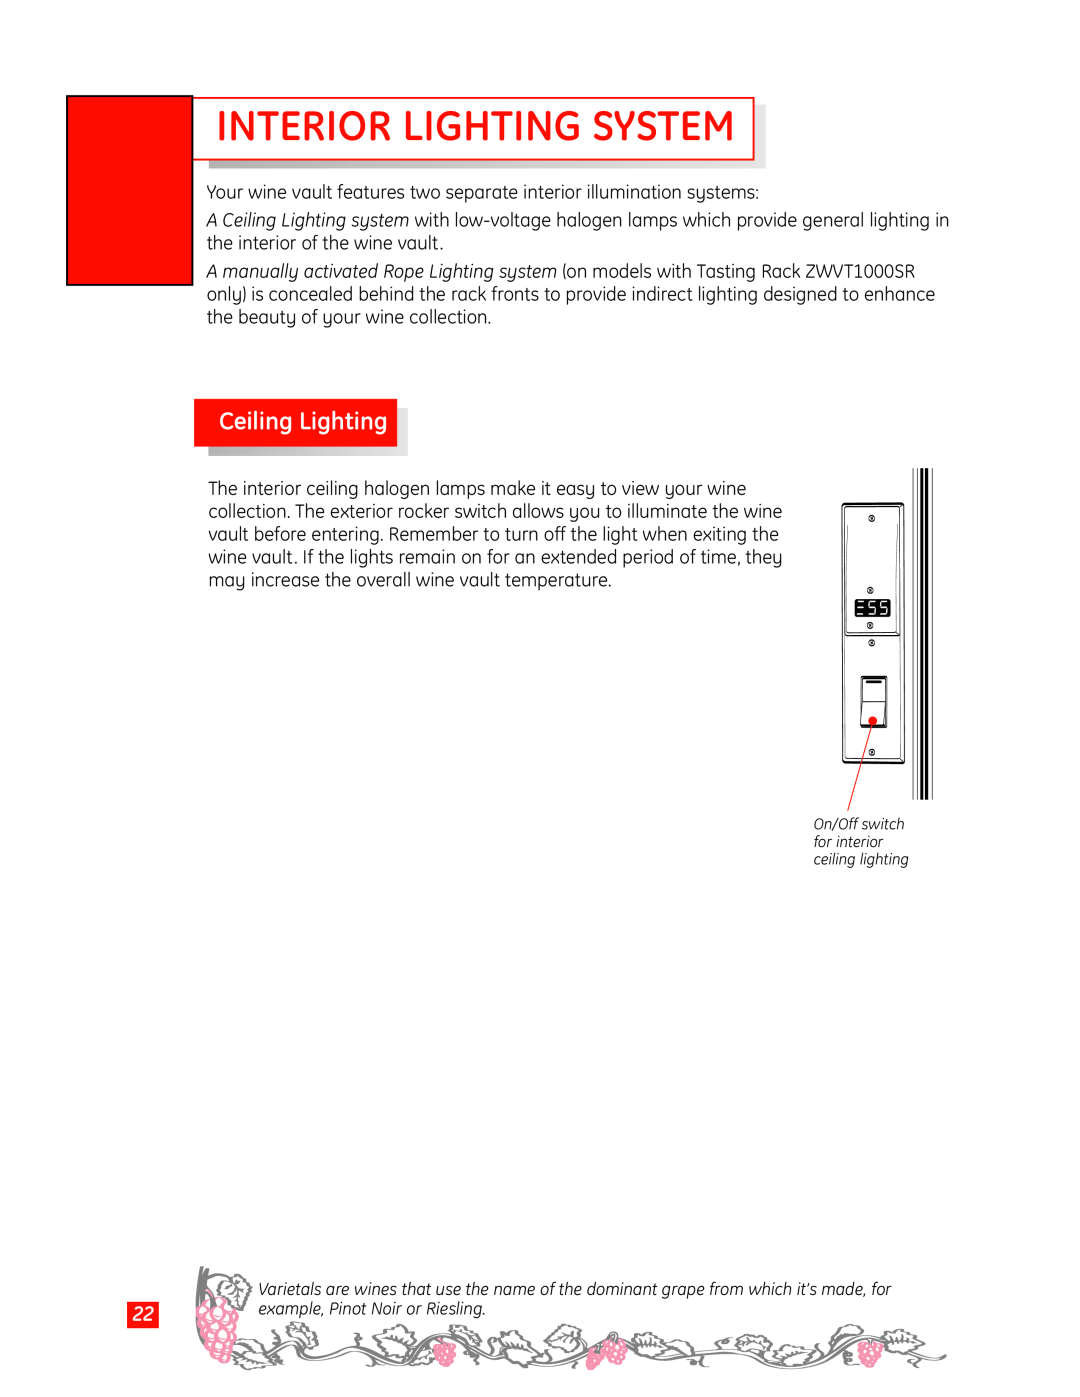 GE Monogram Wine Vault owner manual Interior Lighting System, Ceiling Lighting 